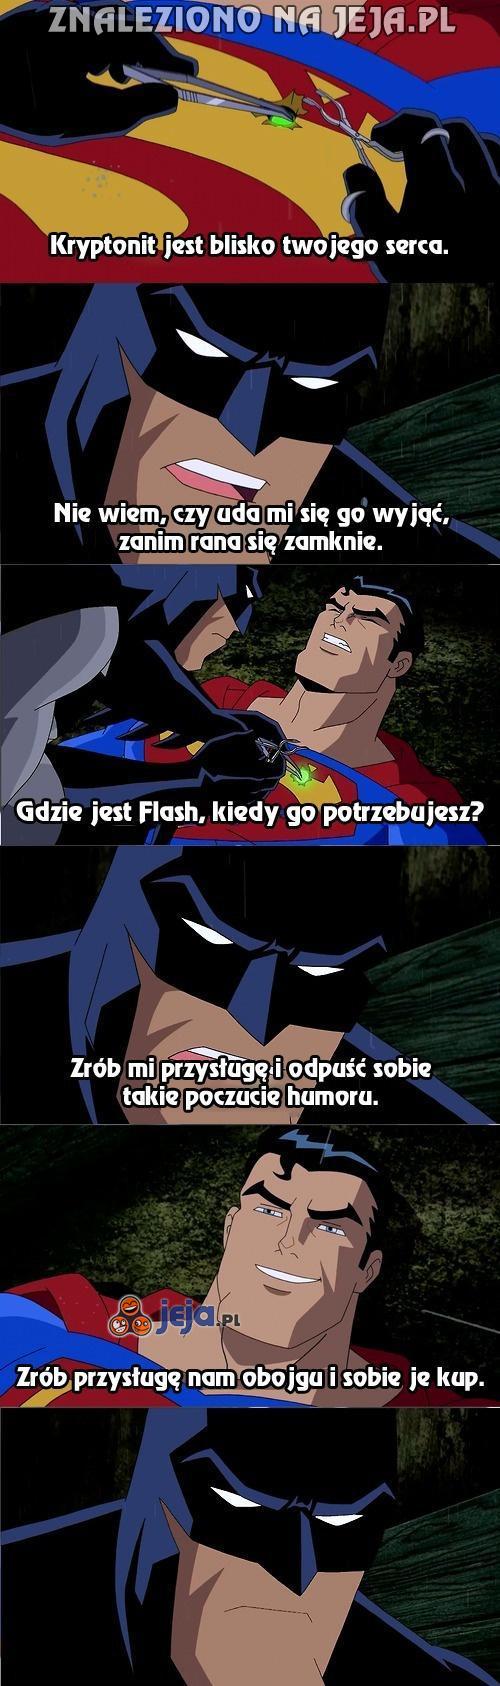 Batmanie, po prostu je kup!